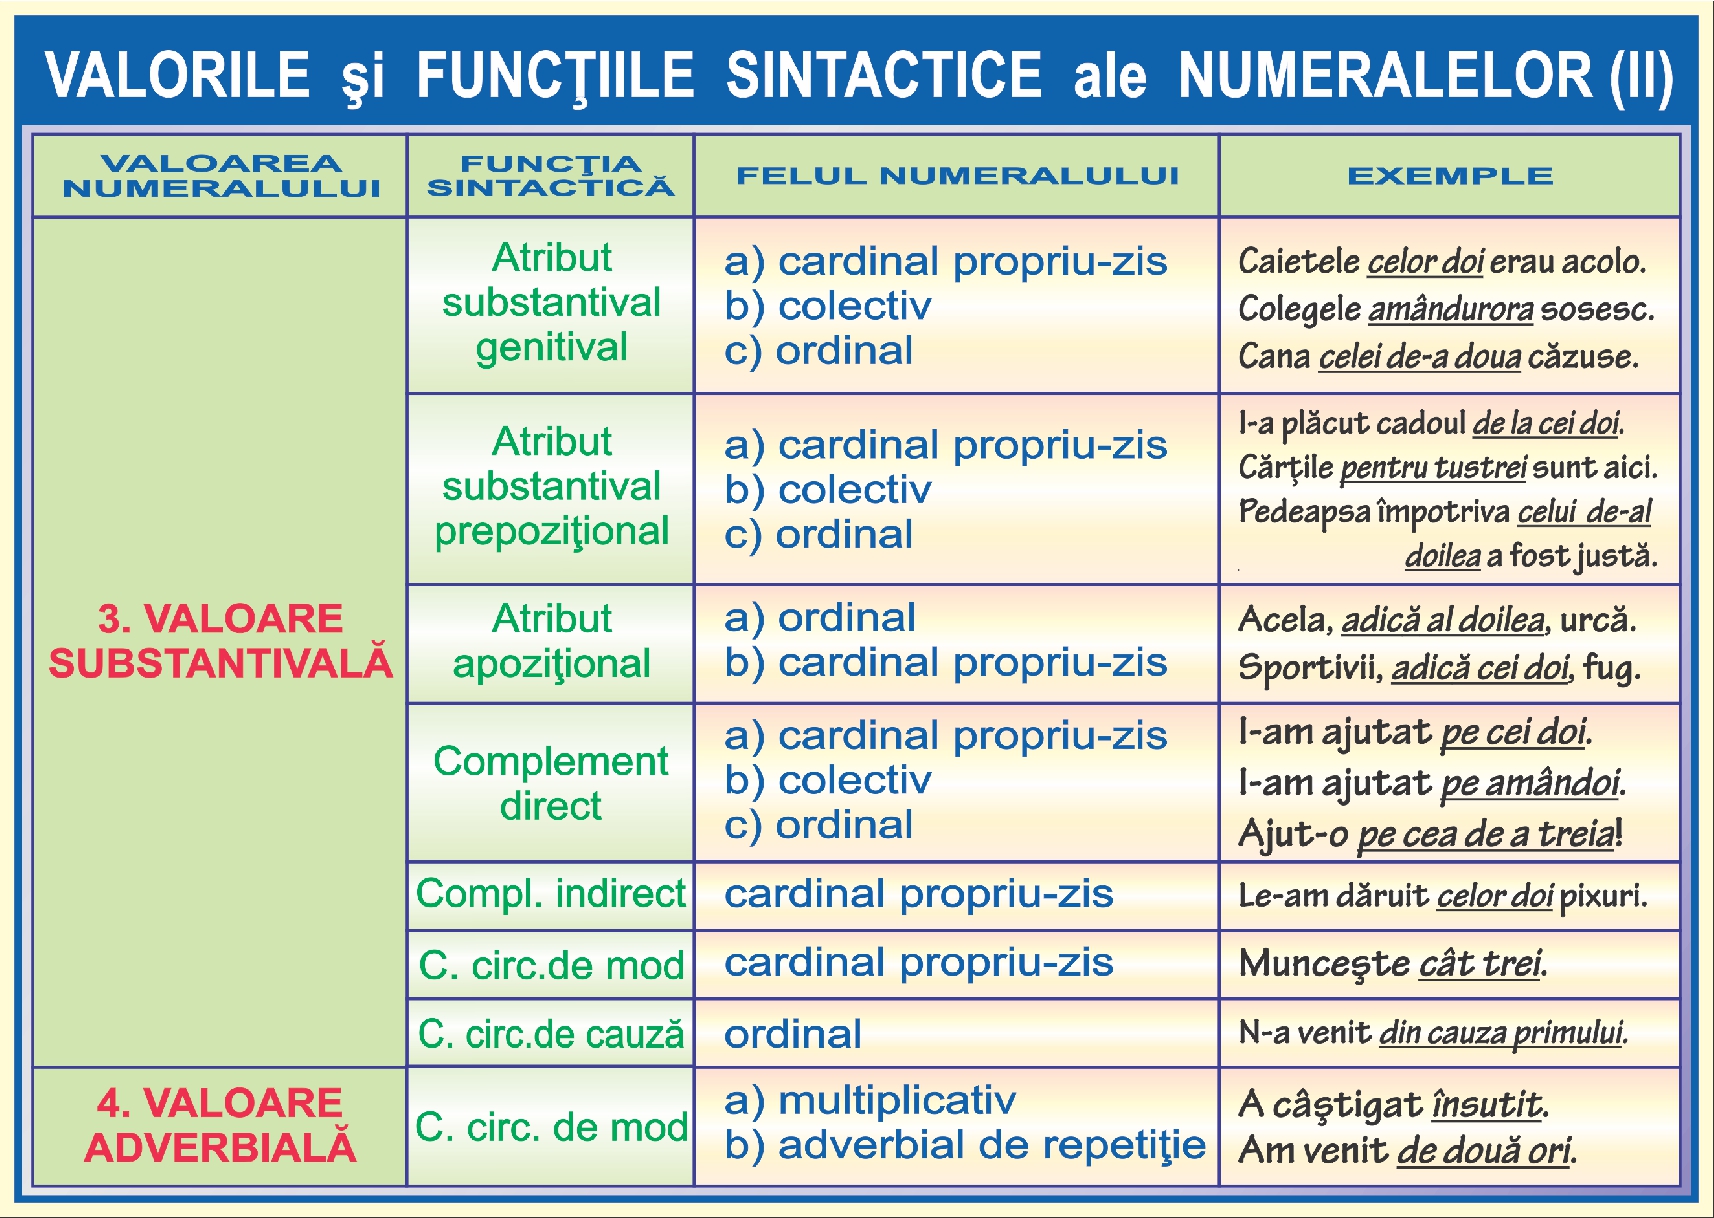 Valorile si functiile sintactice ale numeralelor - II